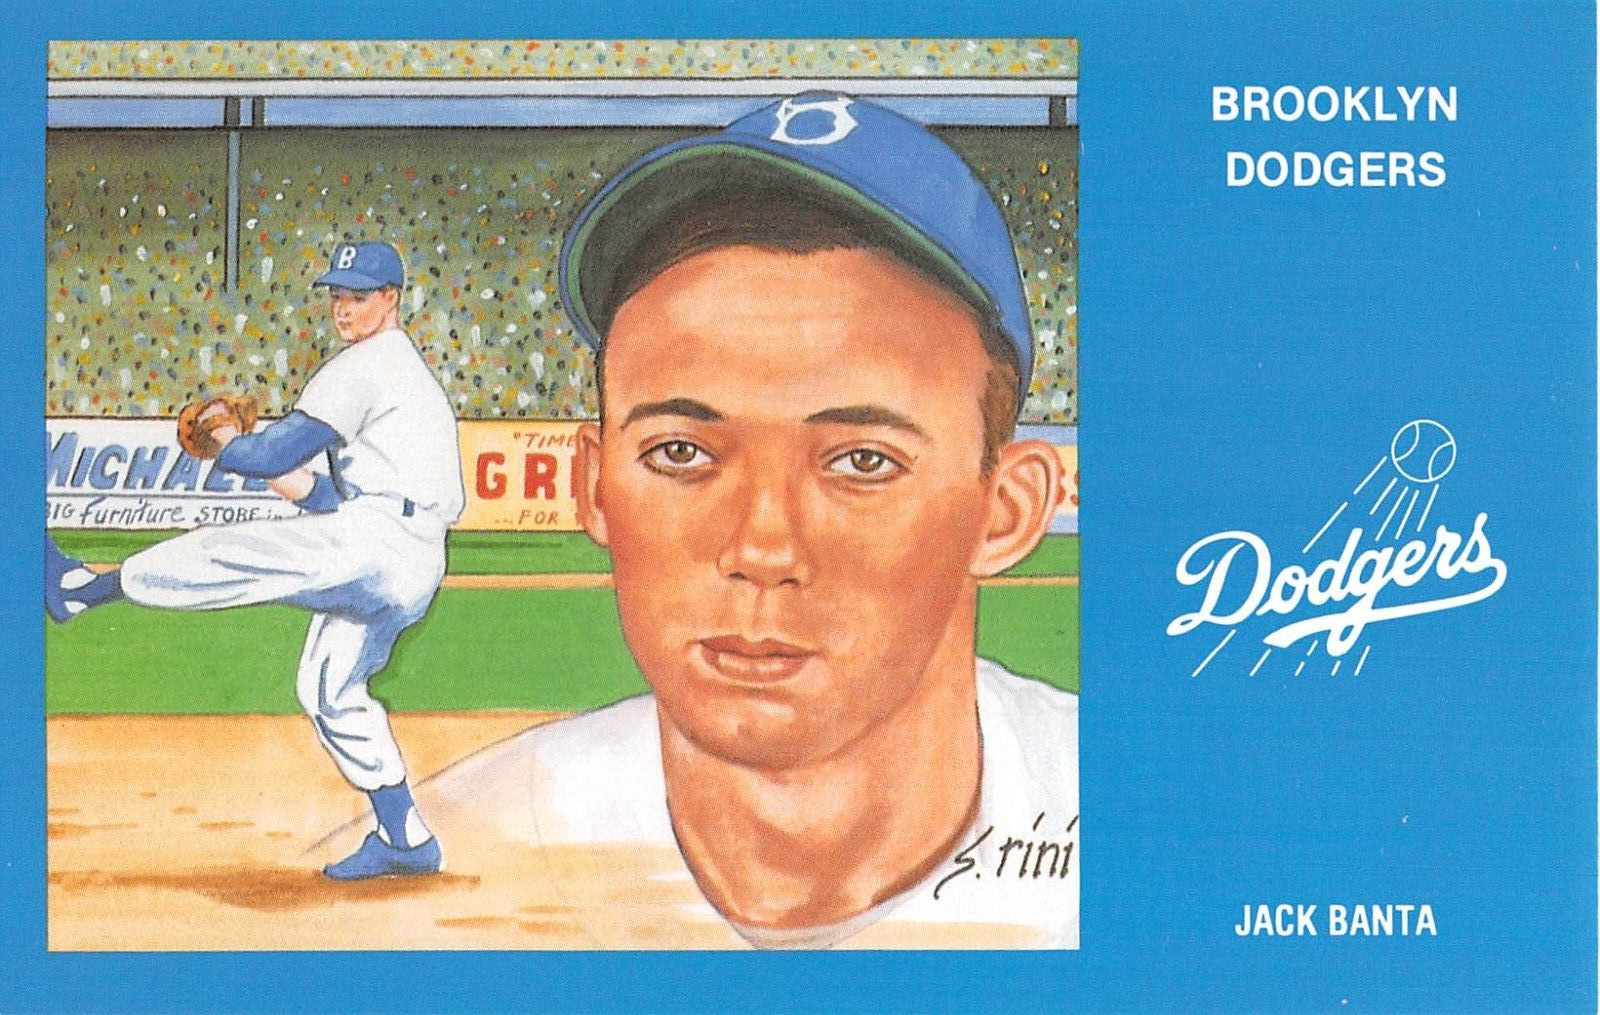 1991 Jack Banta Brooklyn Dodgers post card Baseball